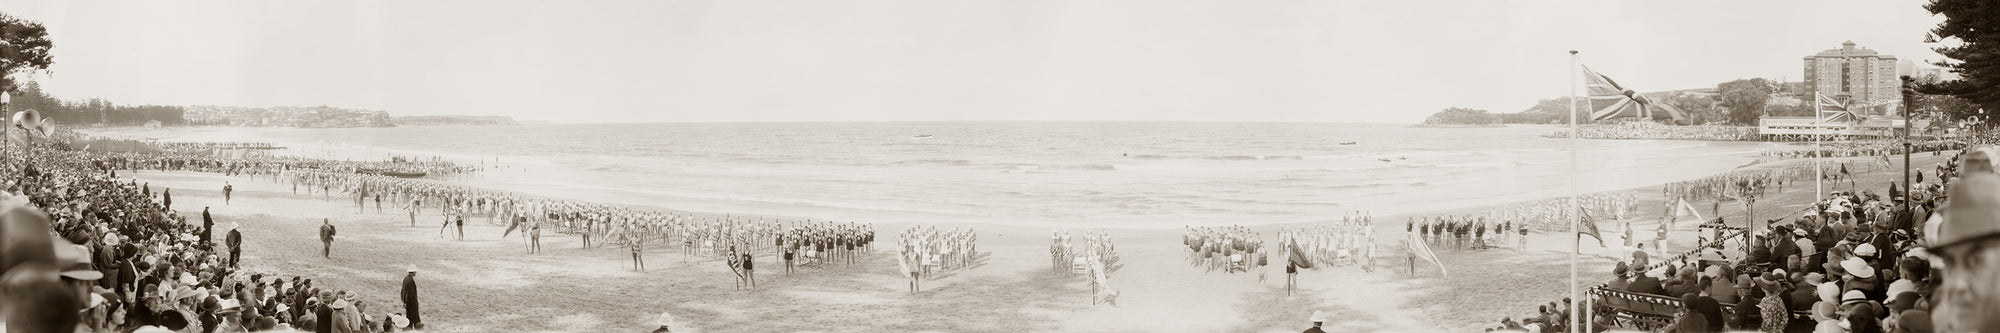 Surf Lifesavings Carnival, Manly NSW Australia 1920s